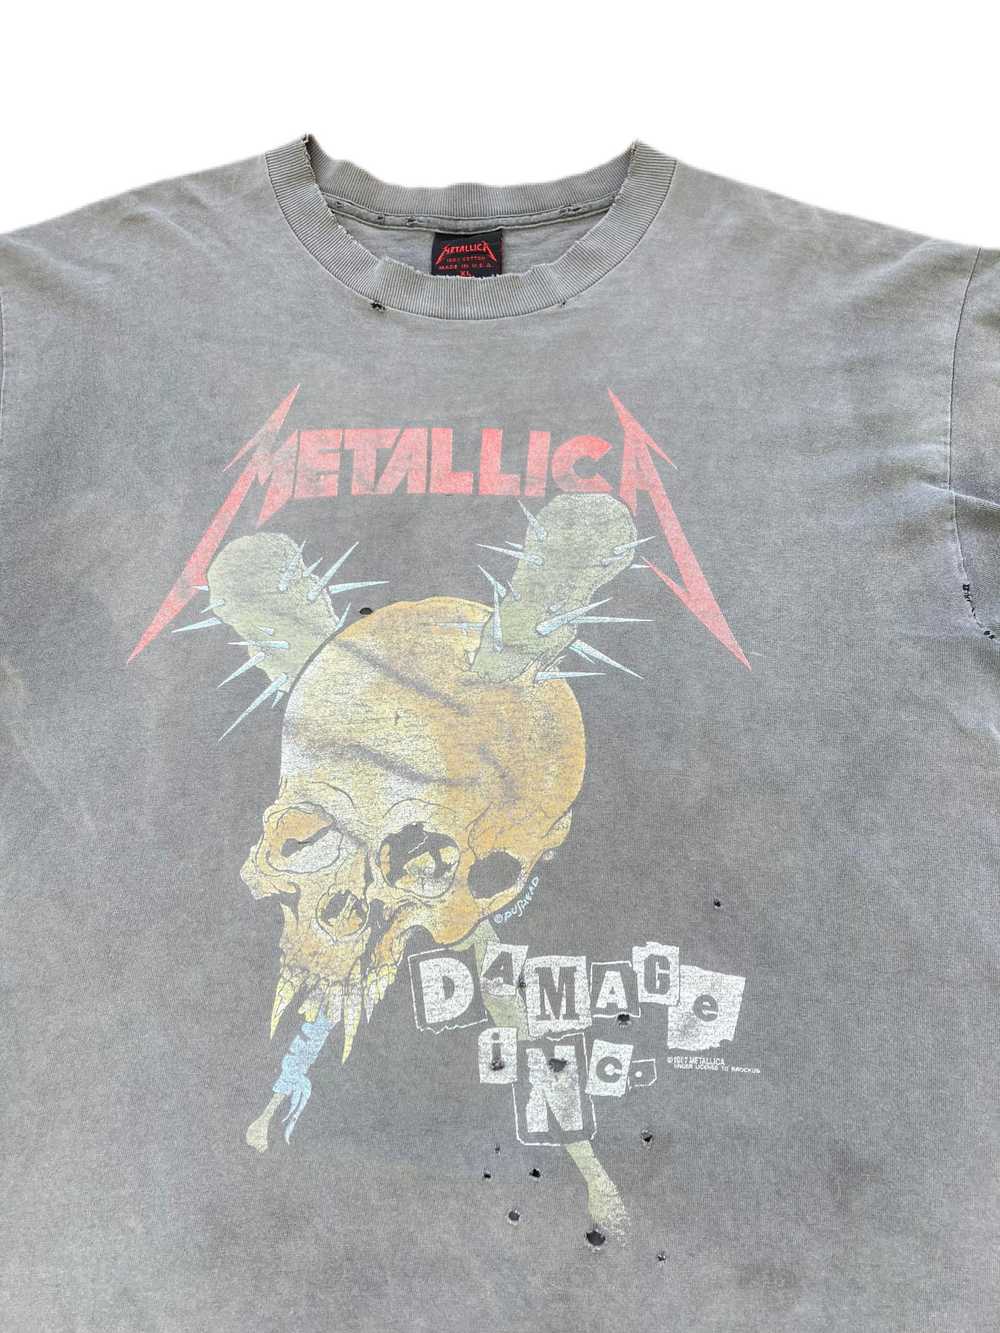 vintage metallica tee shirt damaged justice 1987 - image 3